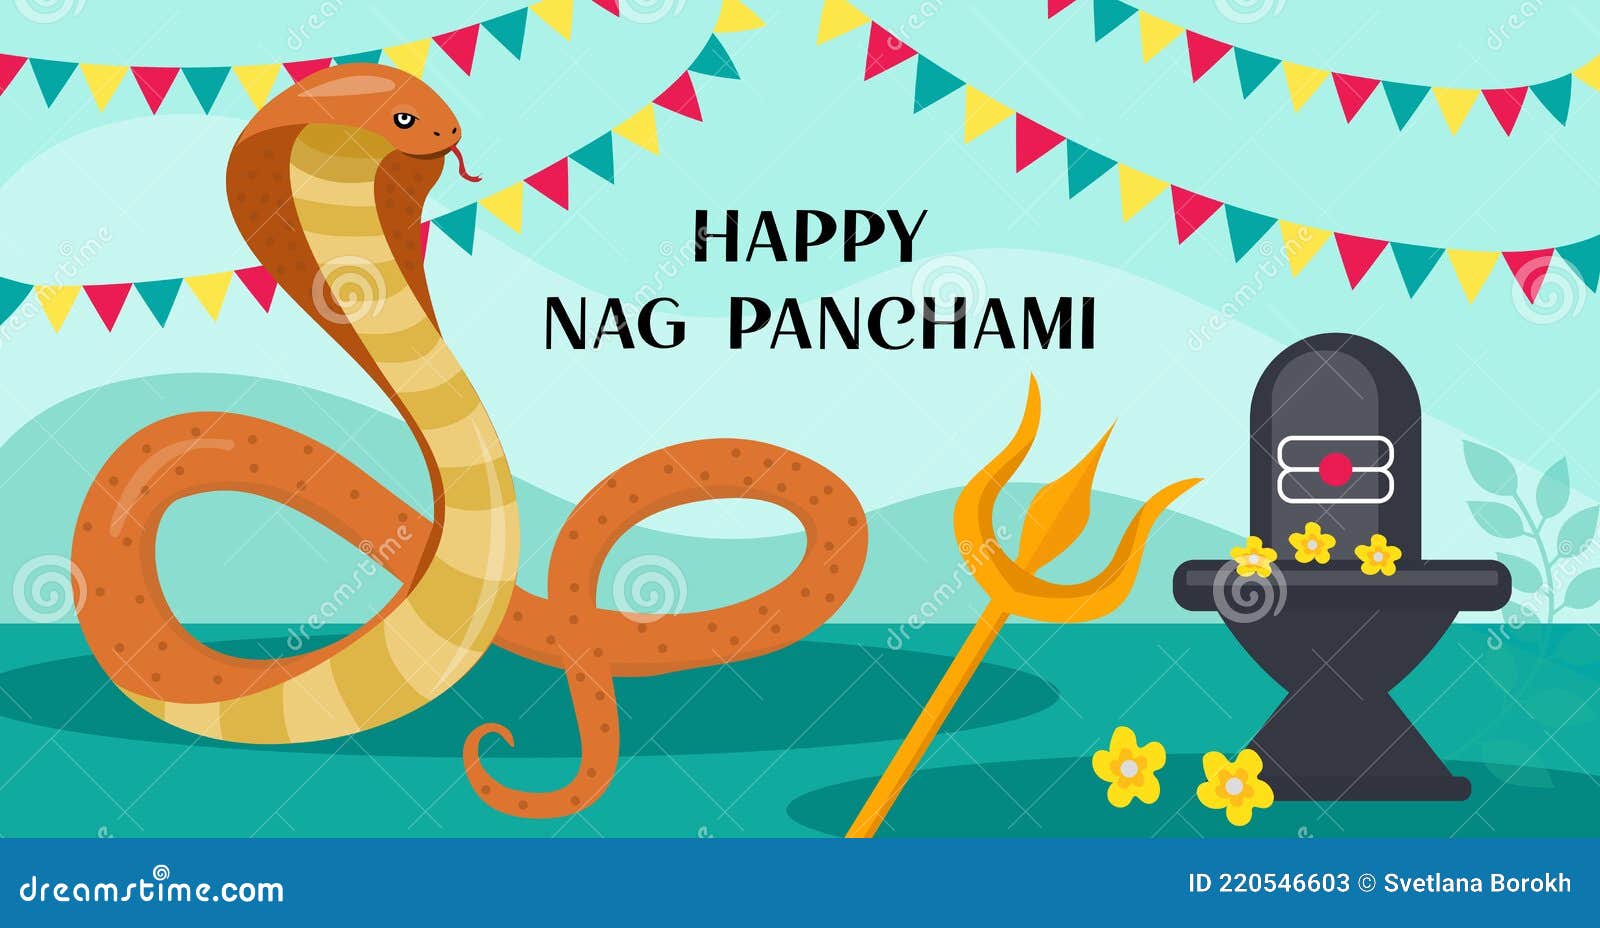 Happy Nag Panchami Greeting Card with King Cobra. Snake Festival in India  Stock Vector - Illustration of shiv, vector: 220546603